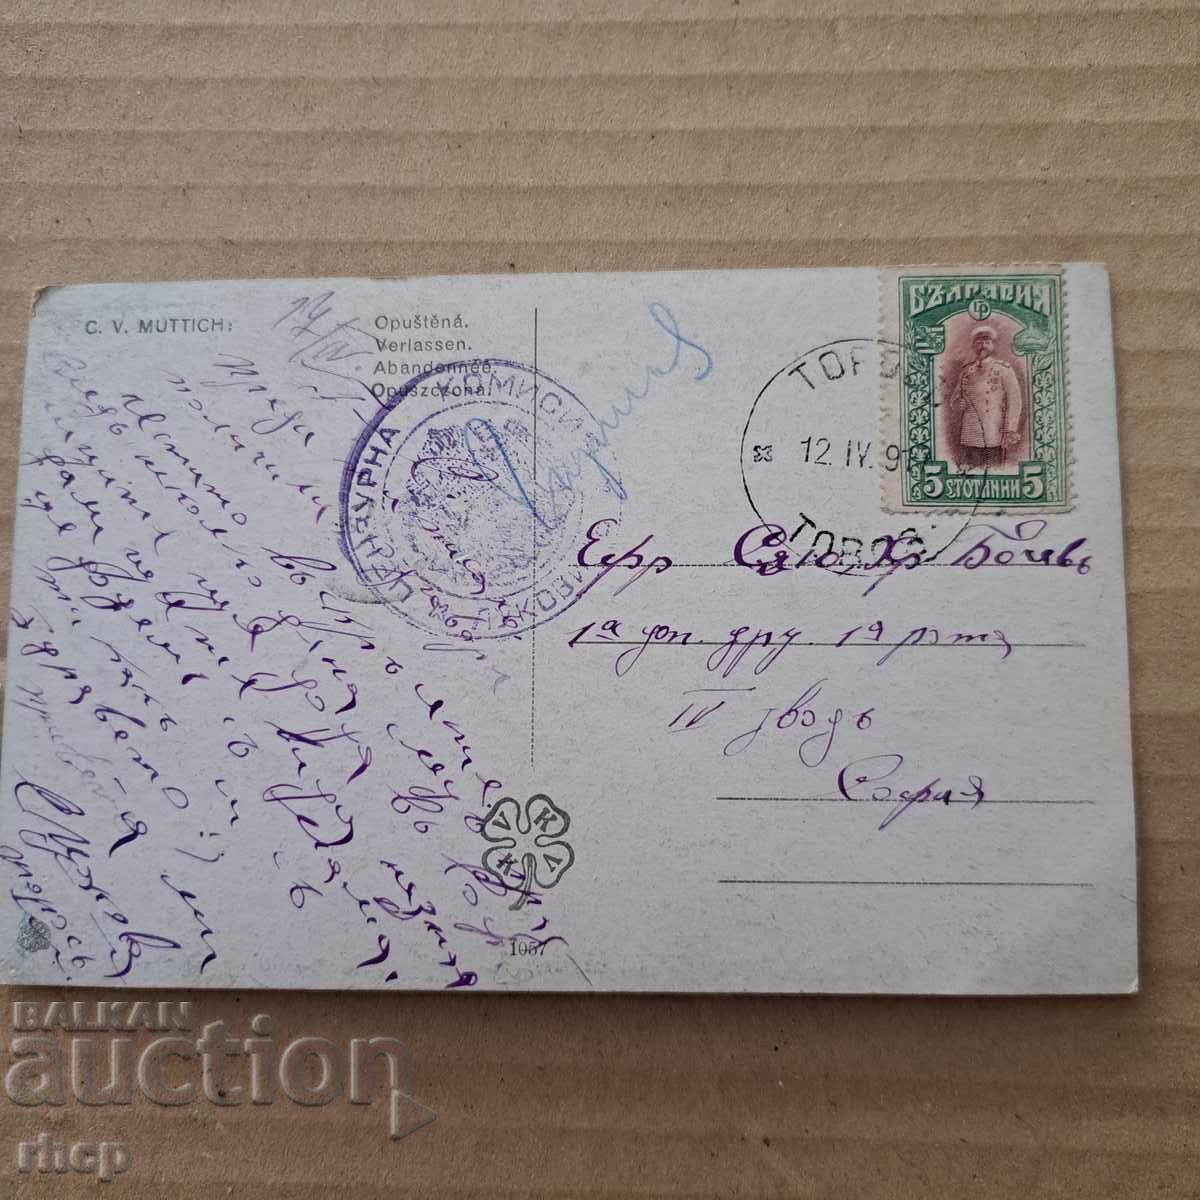 1917 Lyaskovets Censorship Commission stamps a card